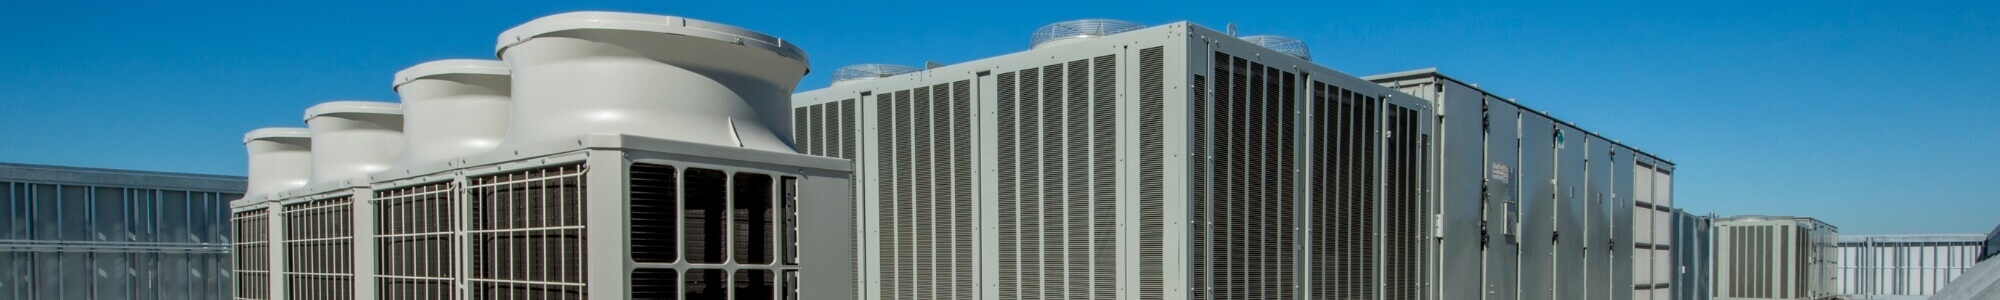 HVAC services in Ajax